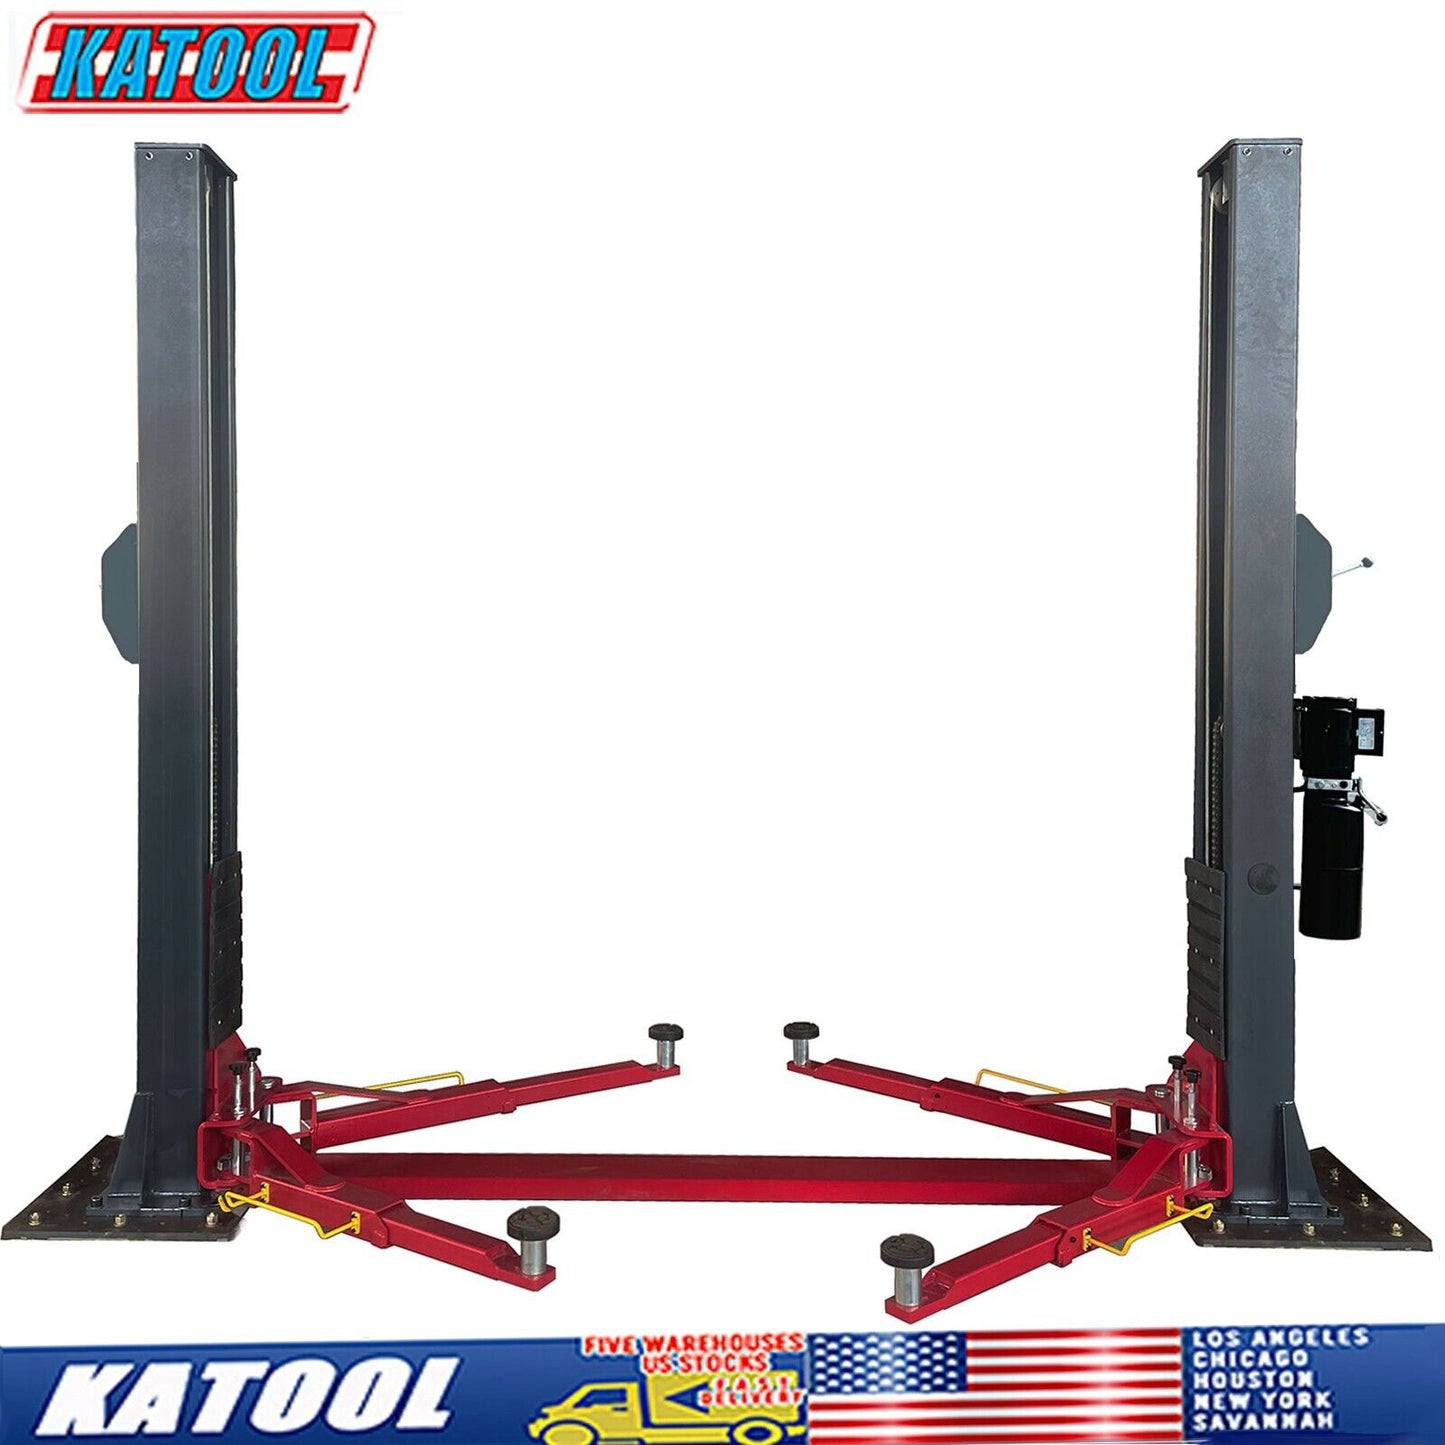 Katool 12000 Lbs Two Post Lift Single Lock Release Auto lift Car lift -H120D